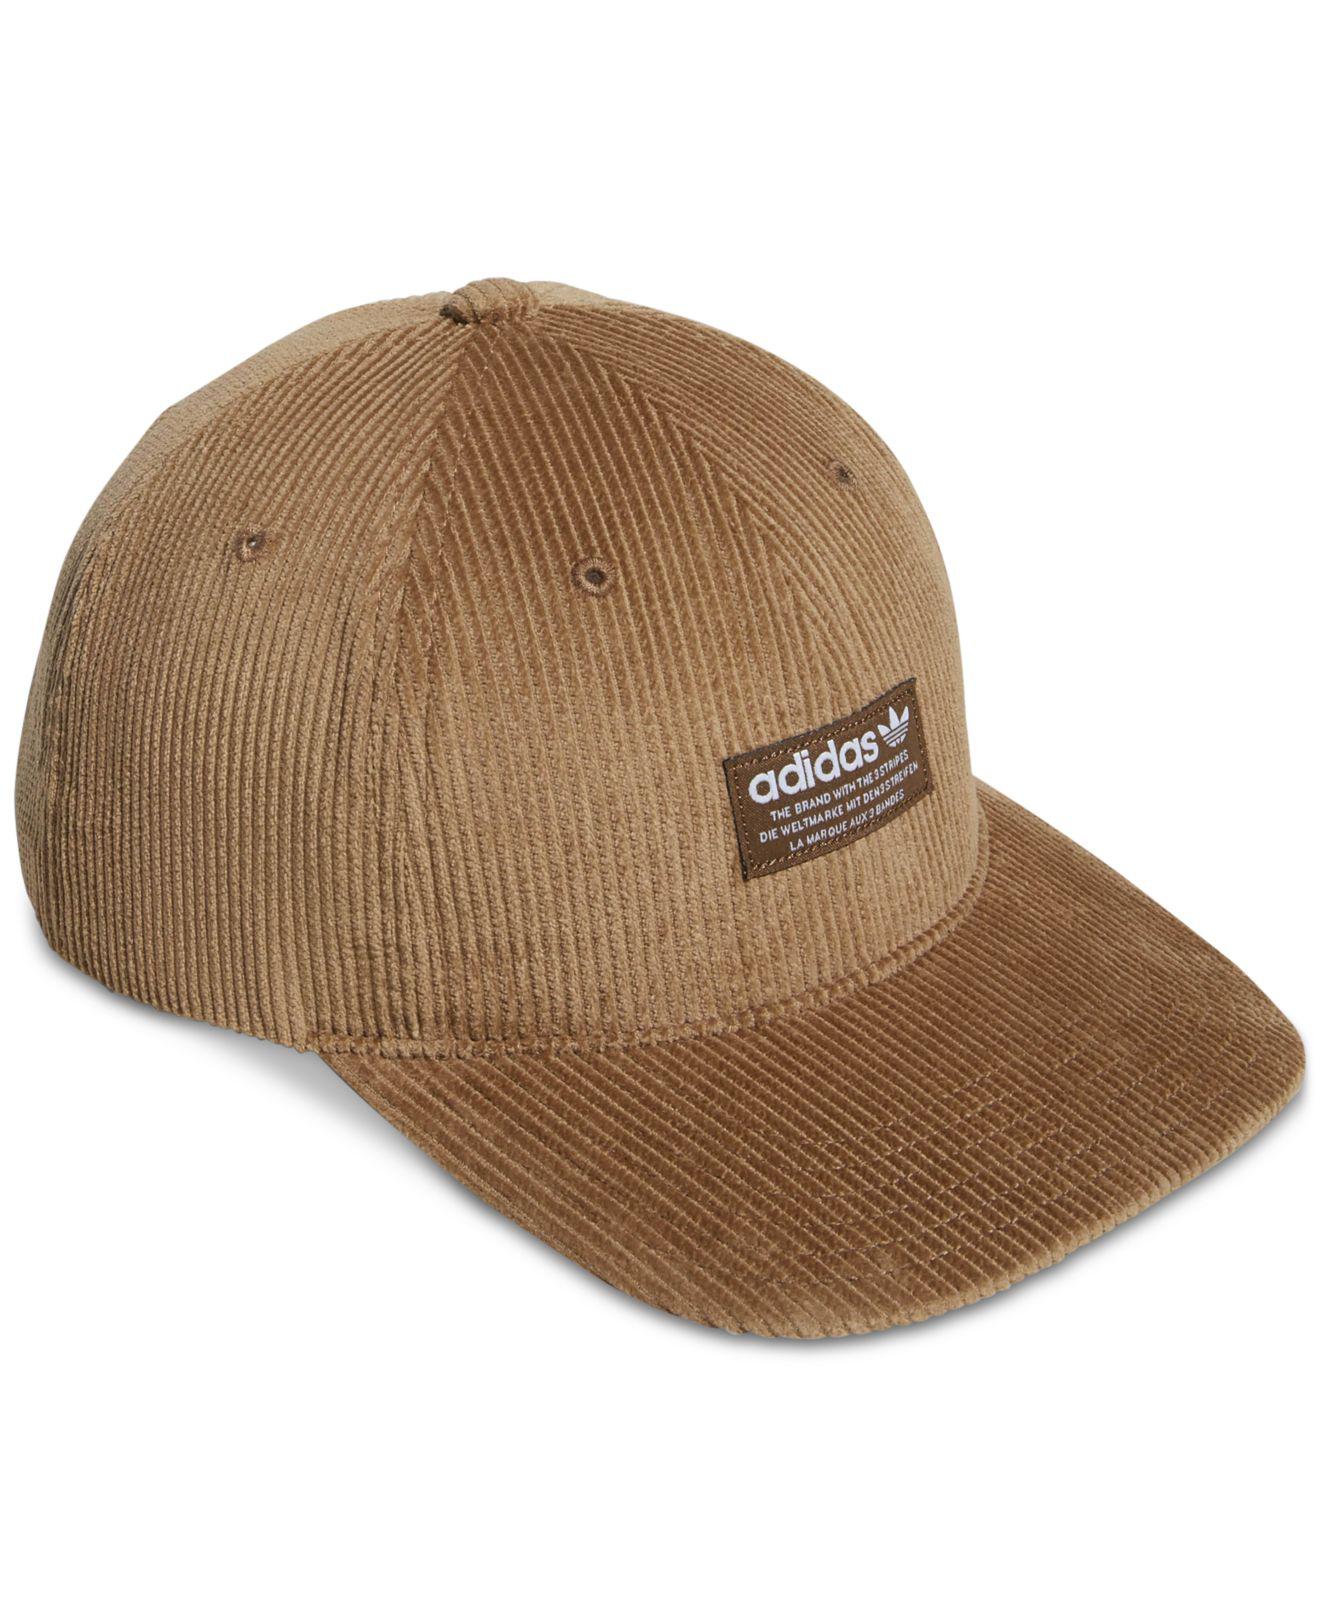 adidas Originals Corduroy Logo Hat in Brown for Men - Lyst